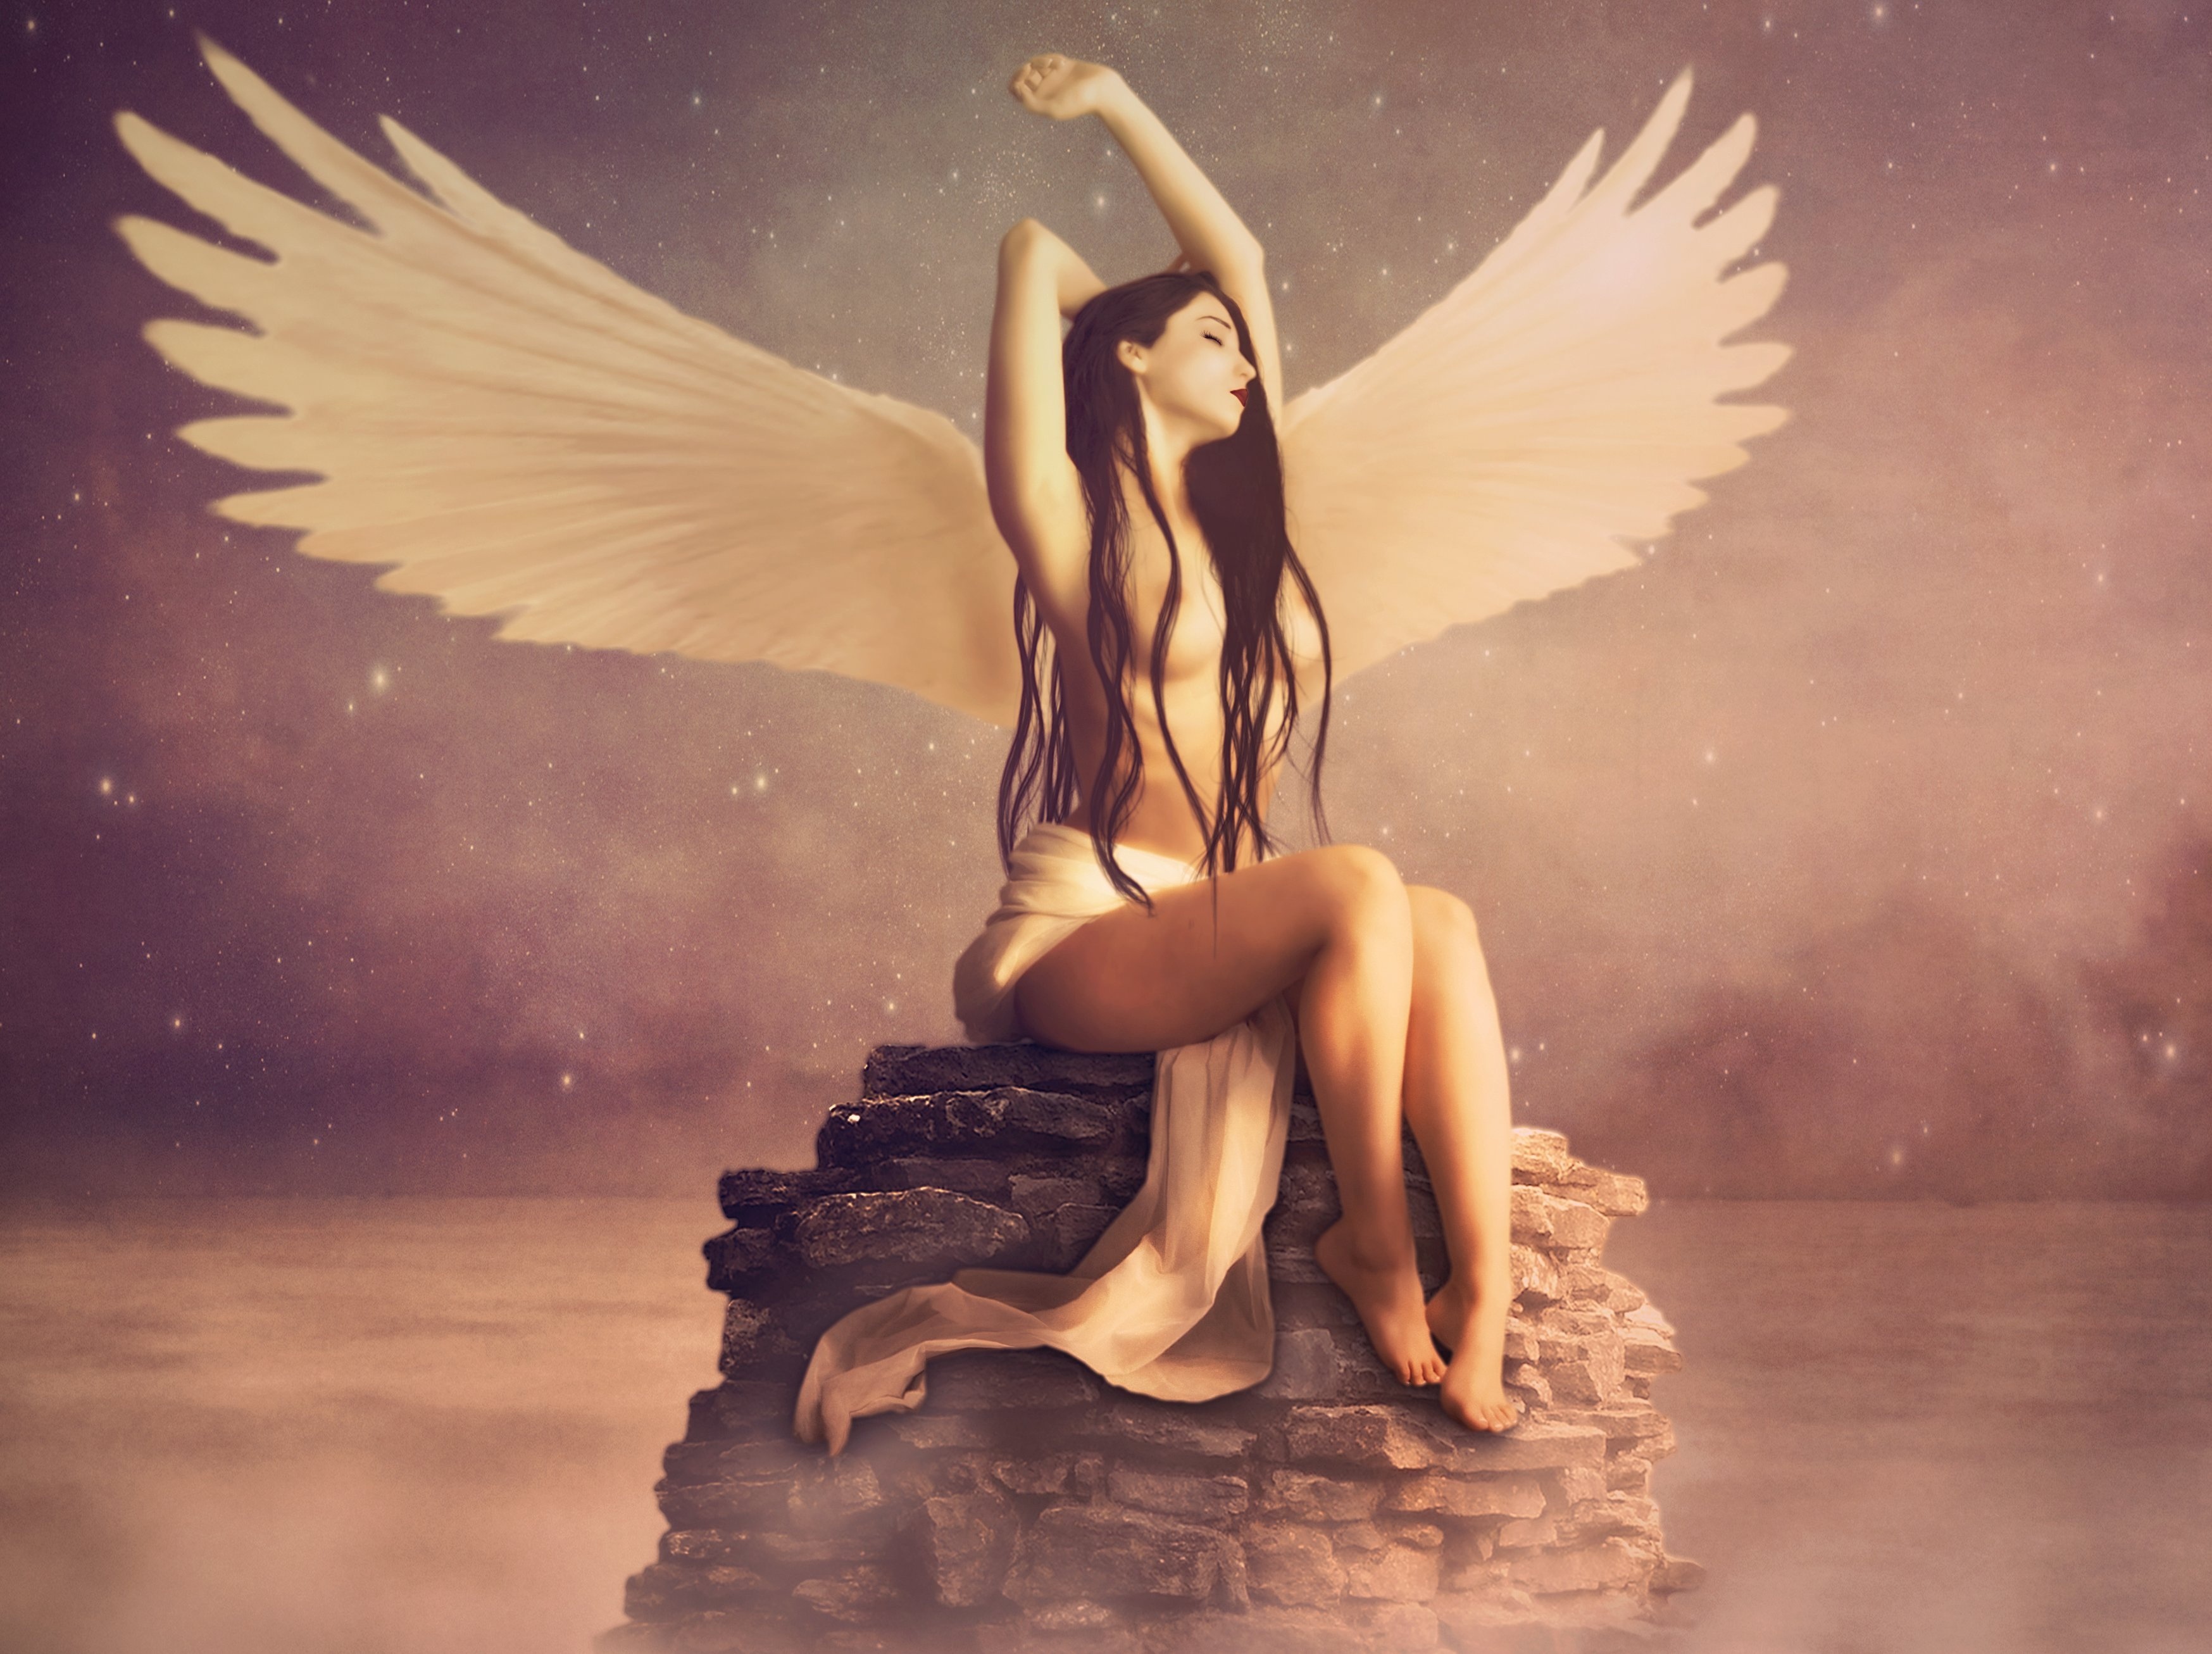 Angels women. Дева-ангел. Девушка - ангел. Девушка с крыльями. Девушка с крыльями ангела.